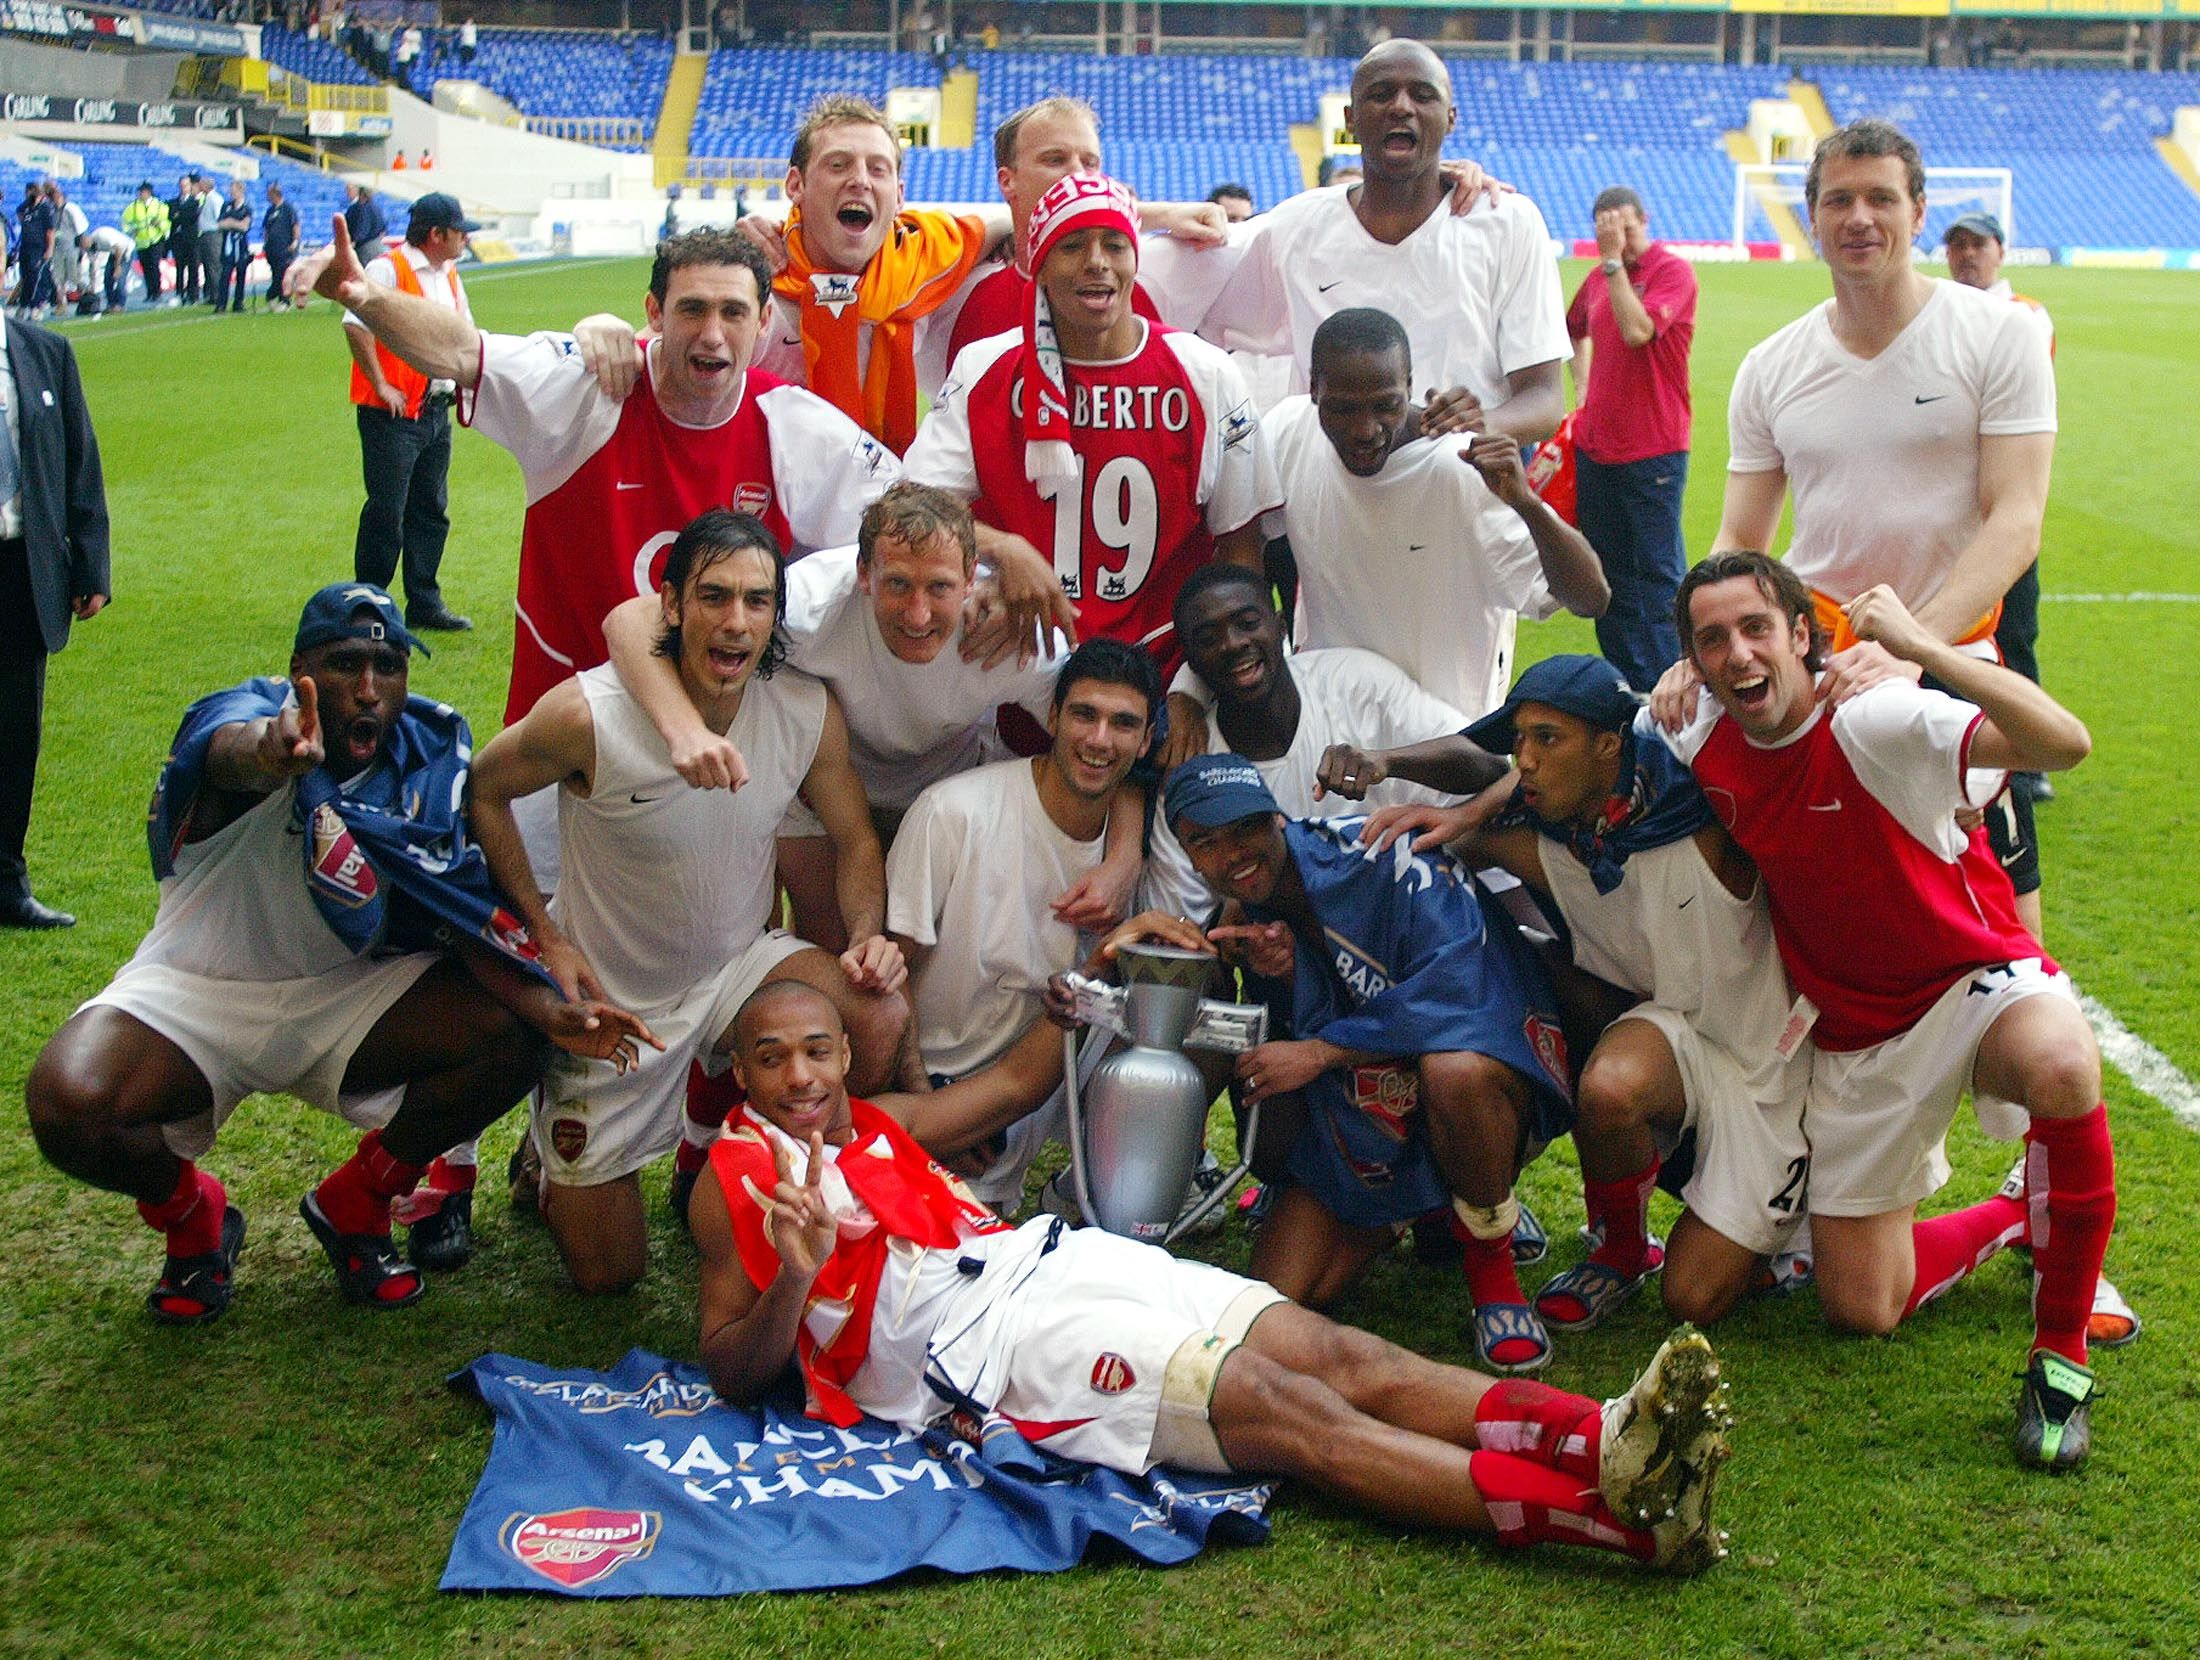 Arsenal celebrate winning the Premier League title in 2003/04